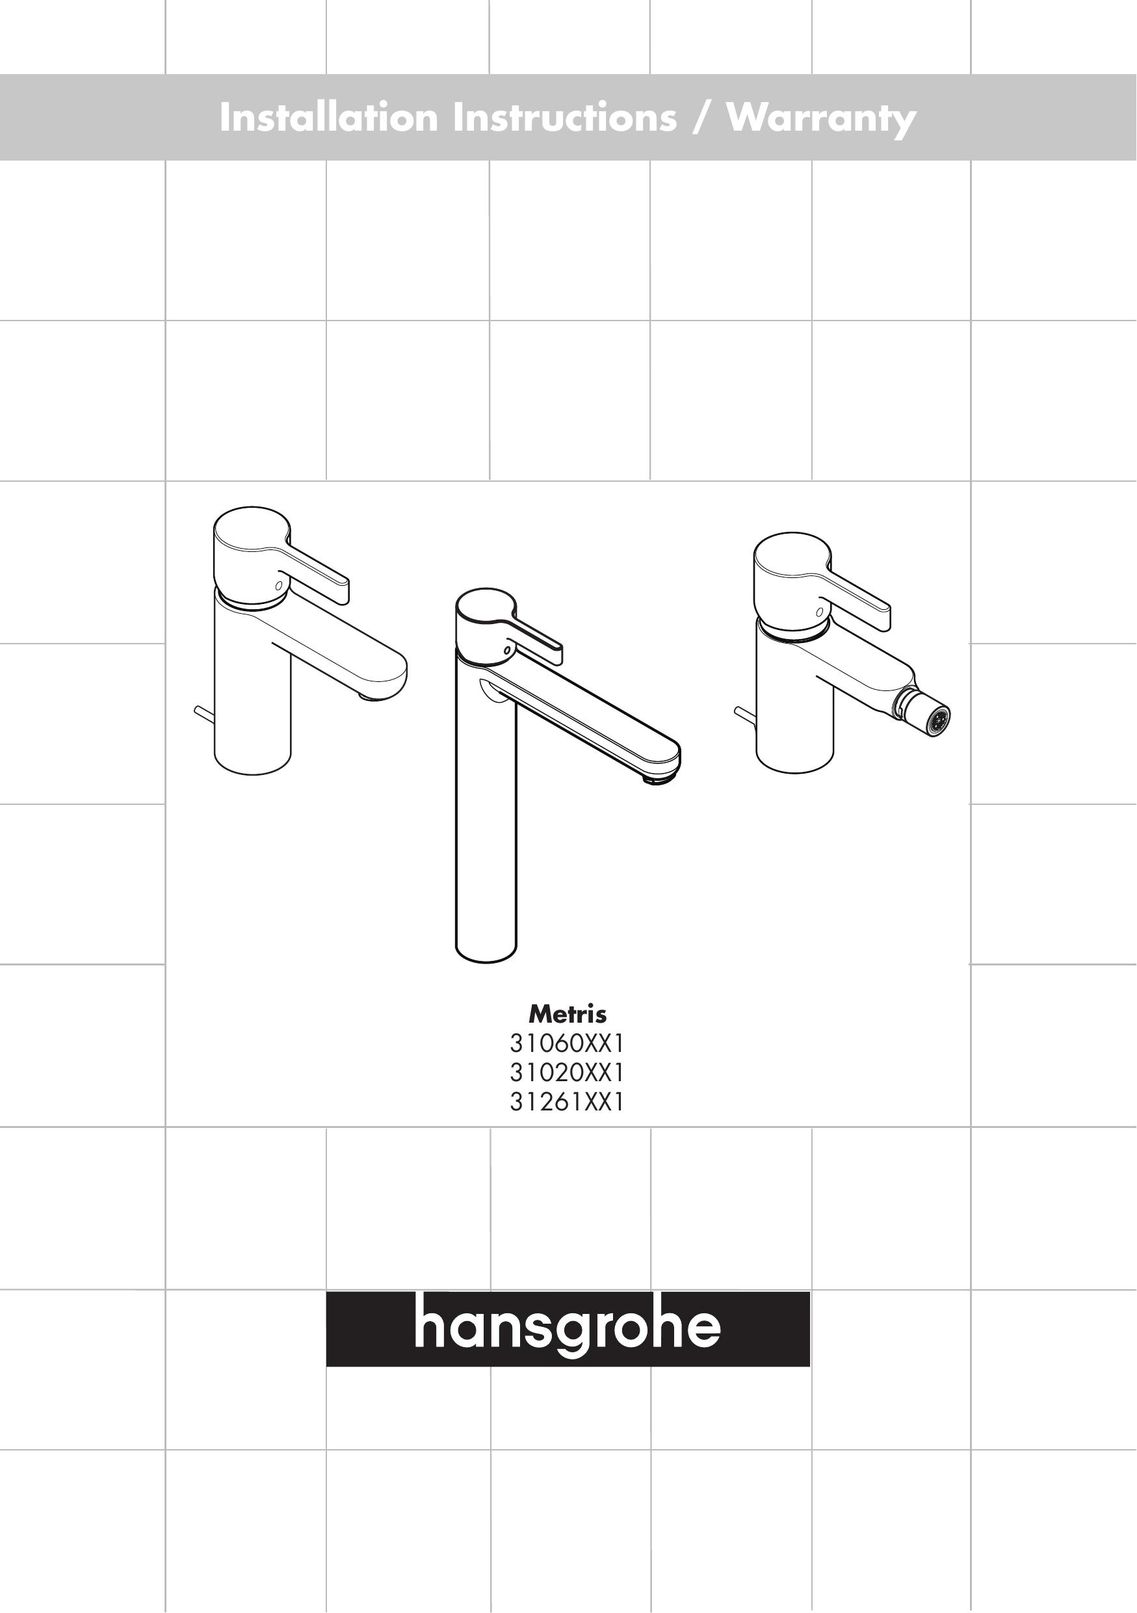 Hans Grohe 31020XX1 Indoor Furnishings User Manual